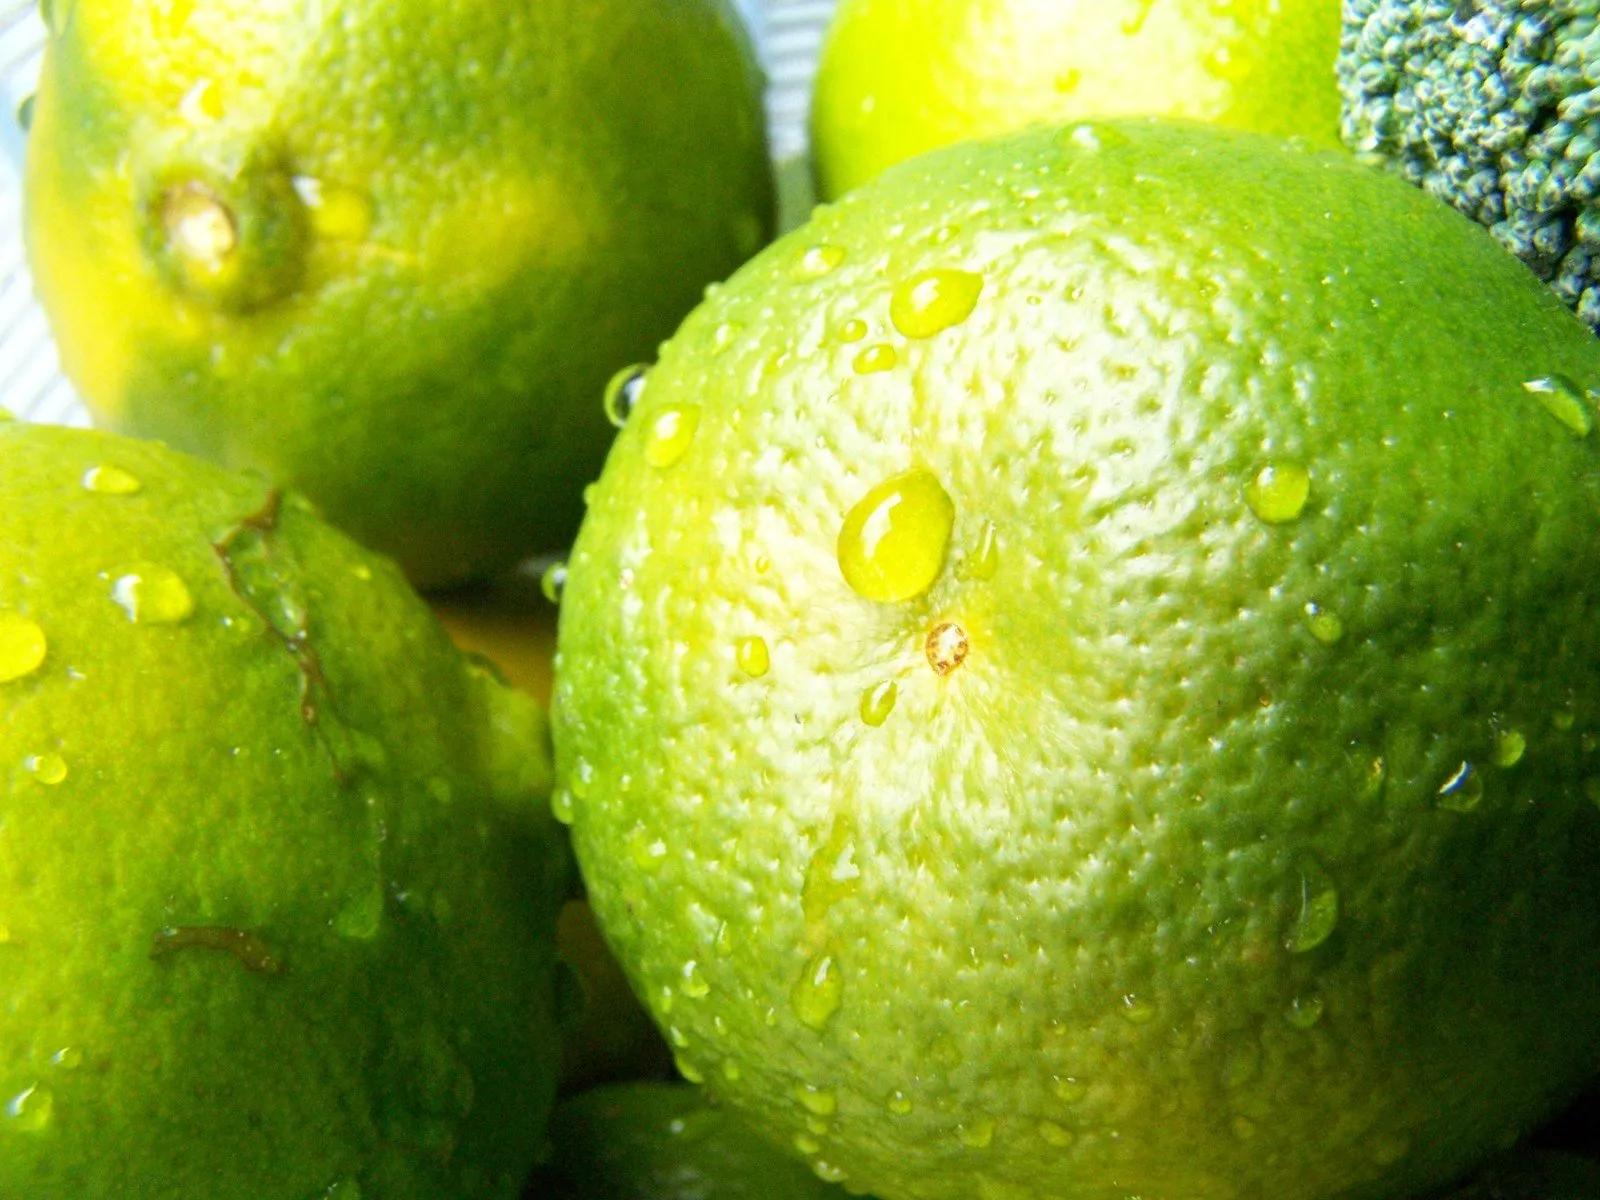 fresh lemons 1 Free Photo Download | FreeImages